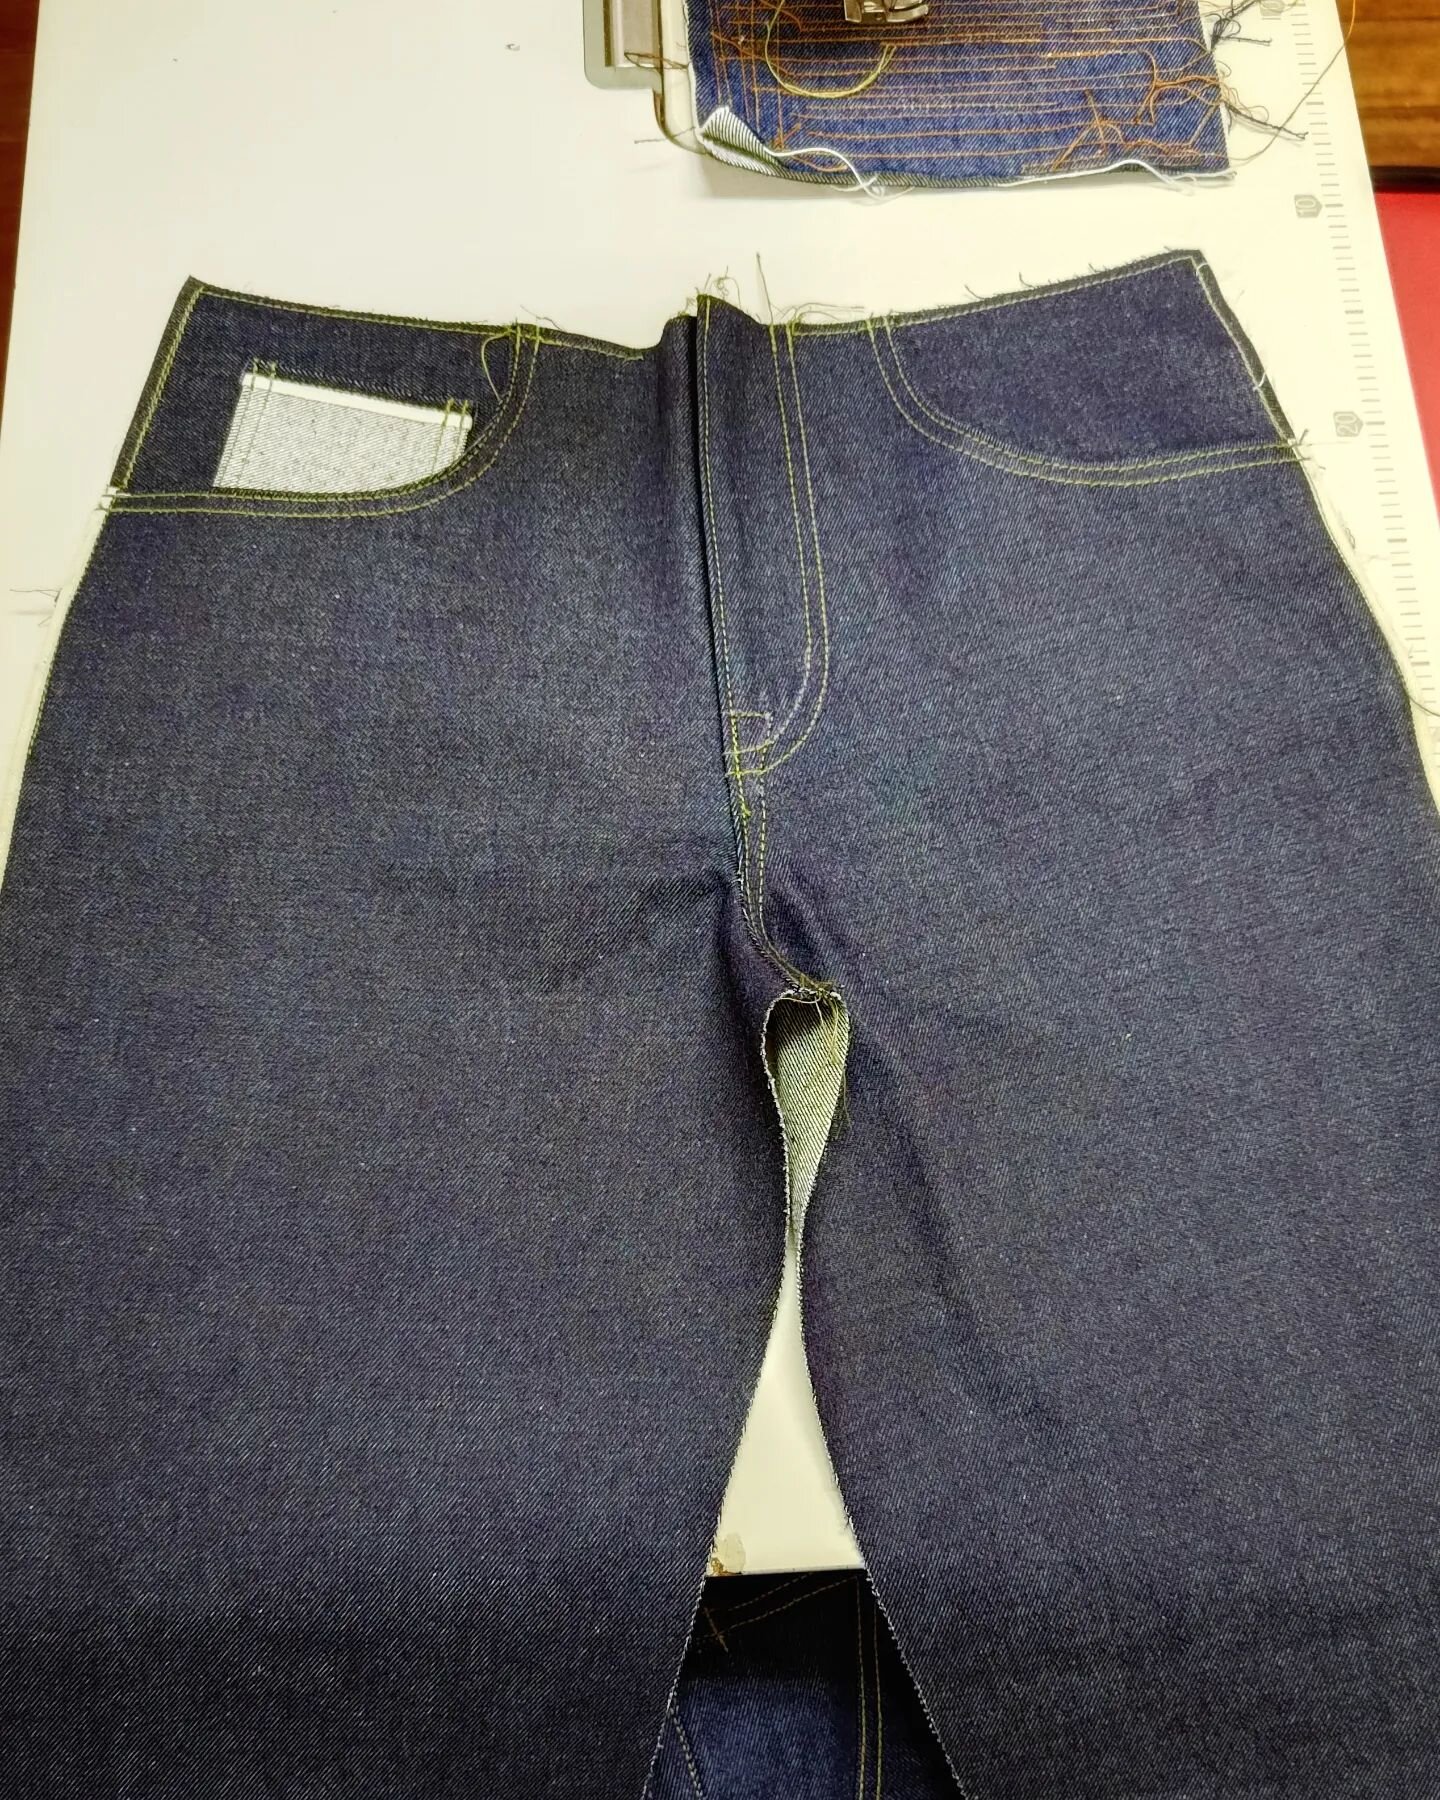 Denim jeans workshop.
Front side finished. With a reverse side denim coin pocket.

#denim #jeans #wip #handmade #newskills #indigo #japan #sewing #bluejean #denimjeans #kievanhavens #fukuyama #workshop #hiroshima #hitotoito #thread #blue